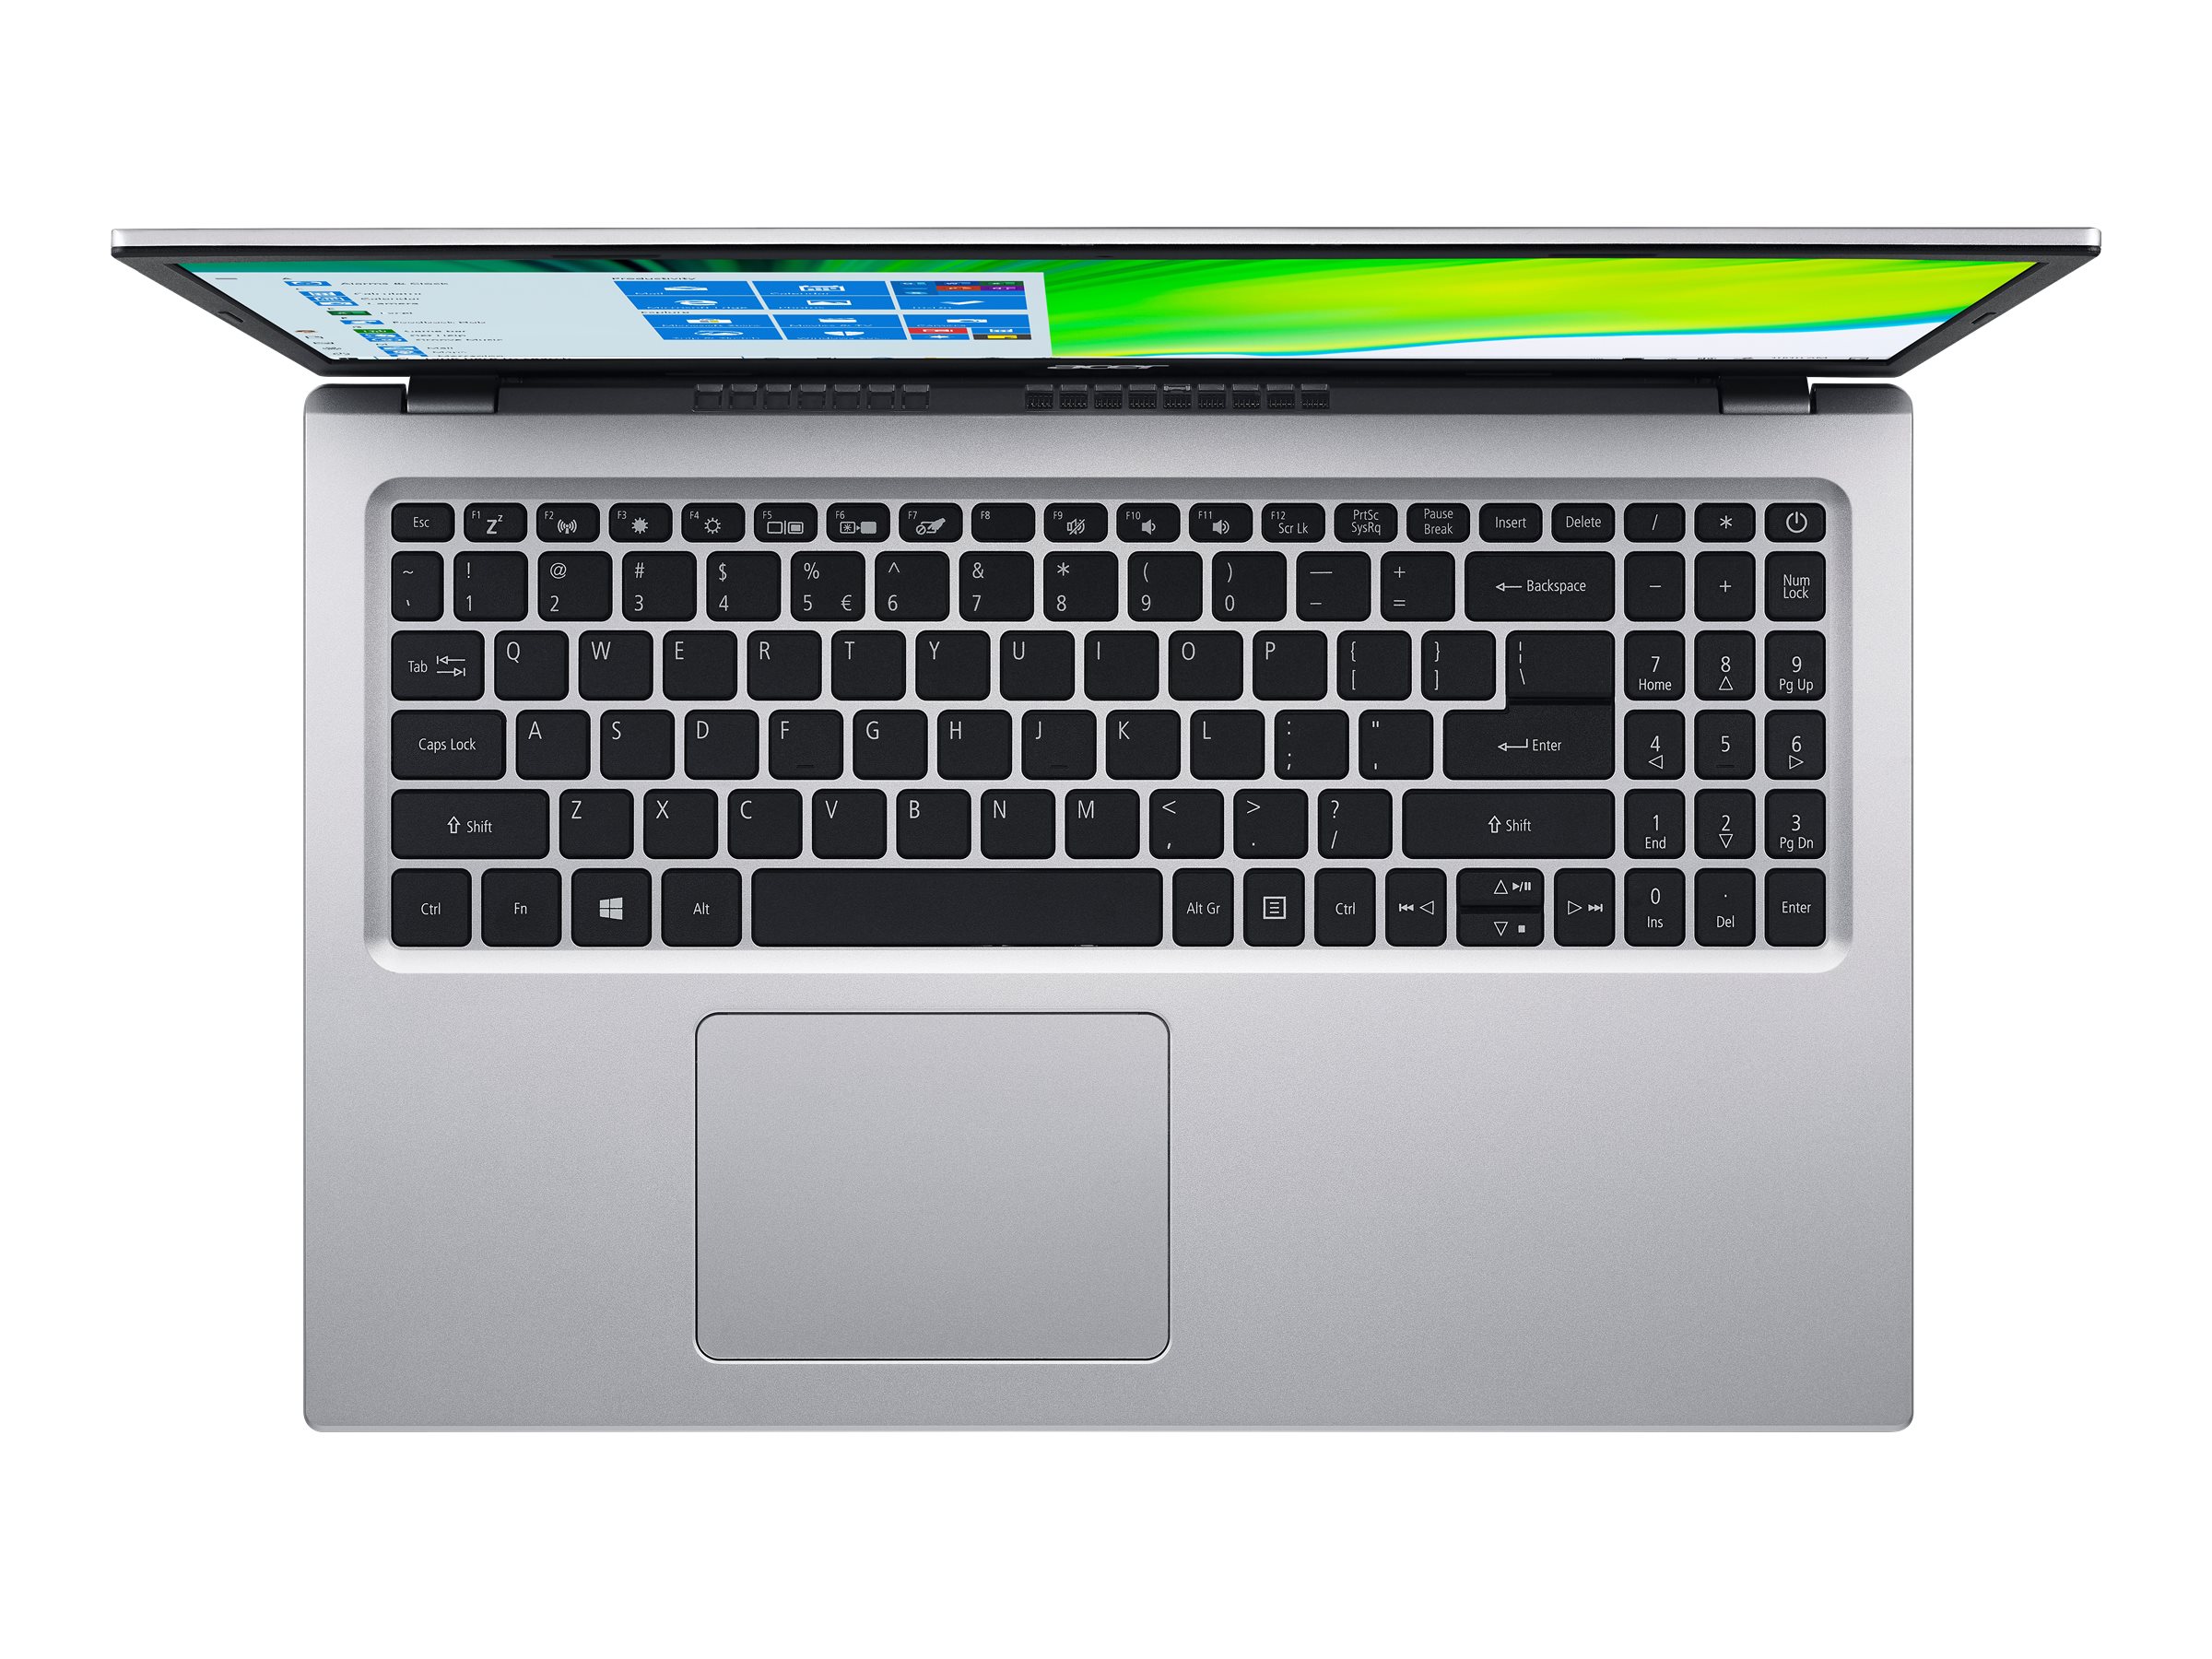 Acer Aspire 5 A515-56-36UT Slim Laptop | 15.6" Full HD Display | 11th Gen Intel Core i3-1115G4 Processor | 4GB DDR4 | 128GB NVMe SSD | WiFi 6 | Amazon Alexa | Windows 10 Home (S Mode) - image 4 of 8